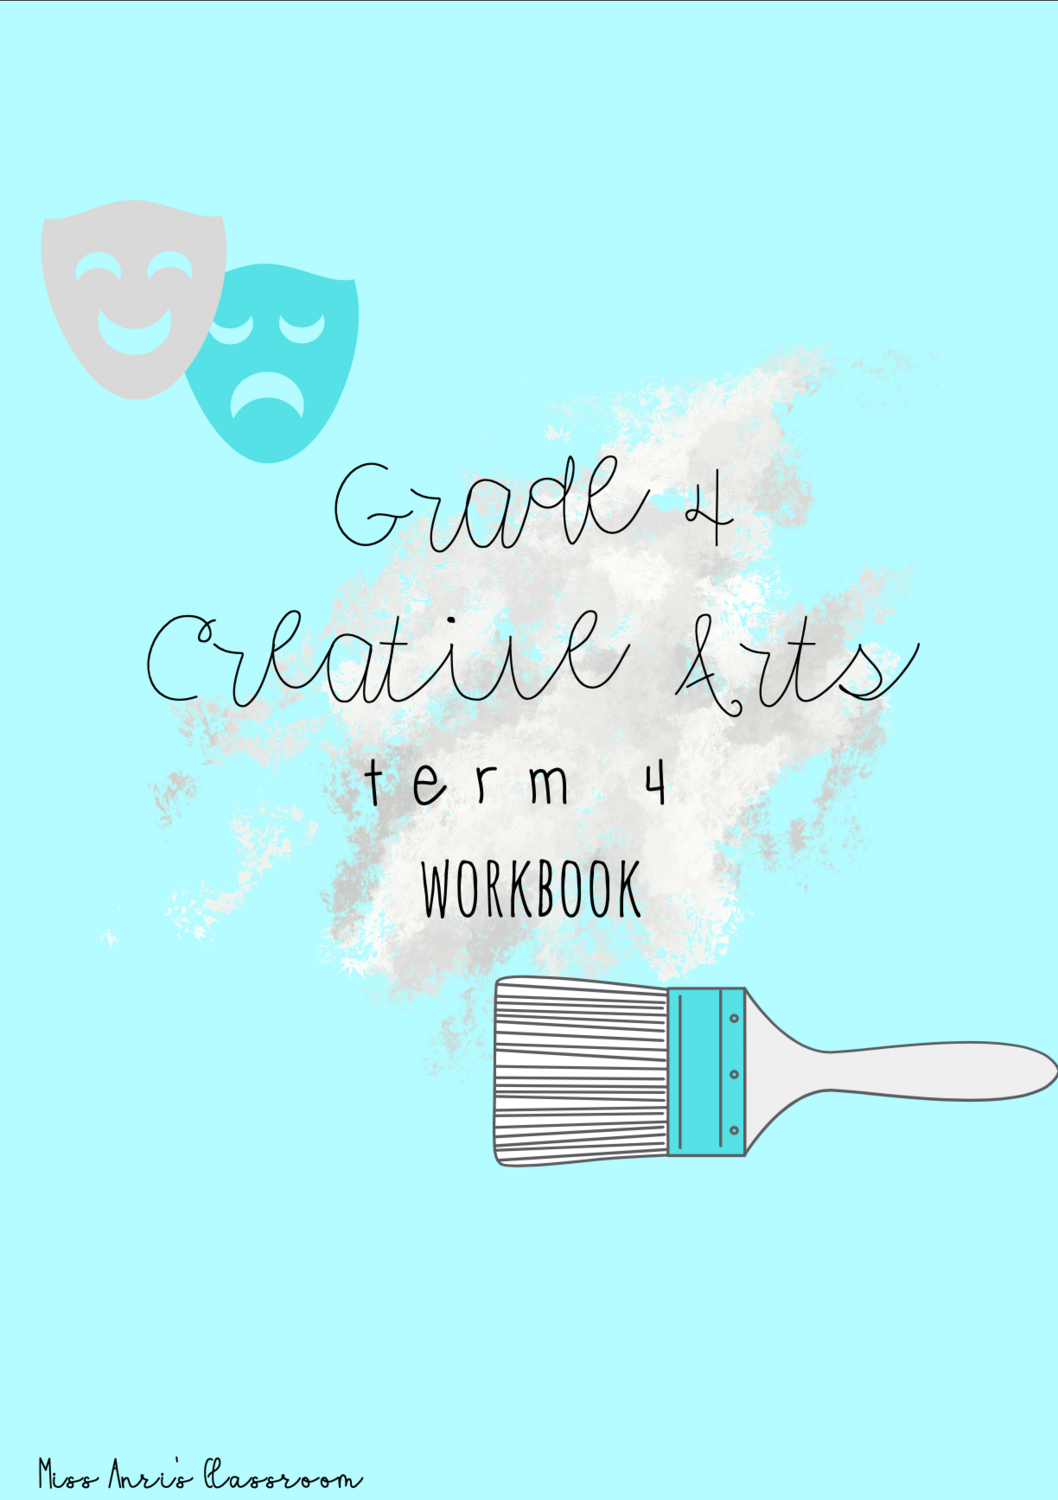 Grade 4 Creative Arts term 4 workbook (2022)